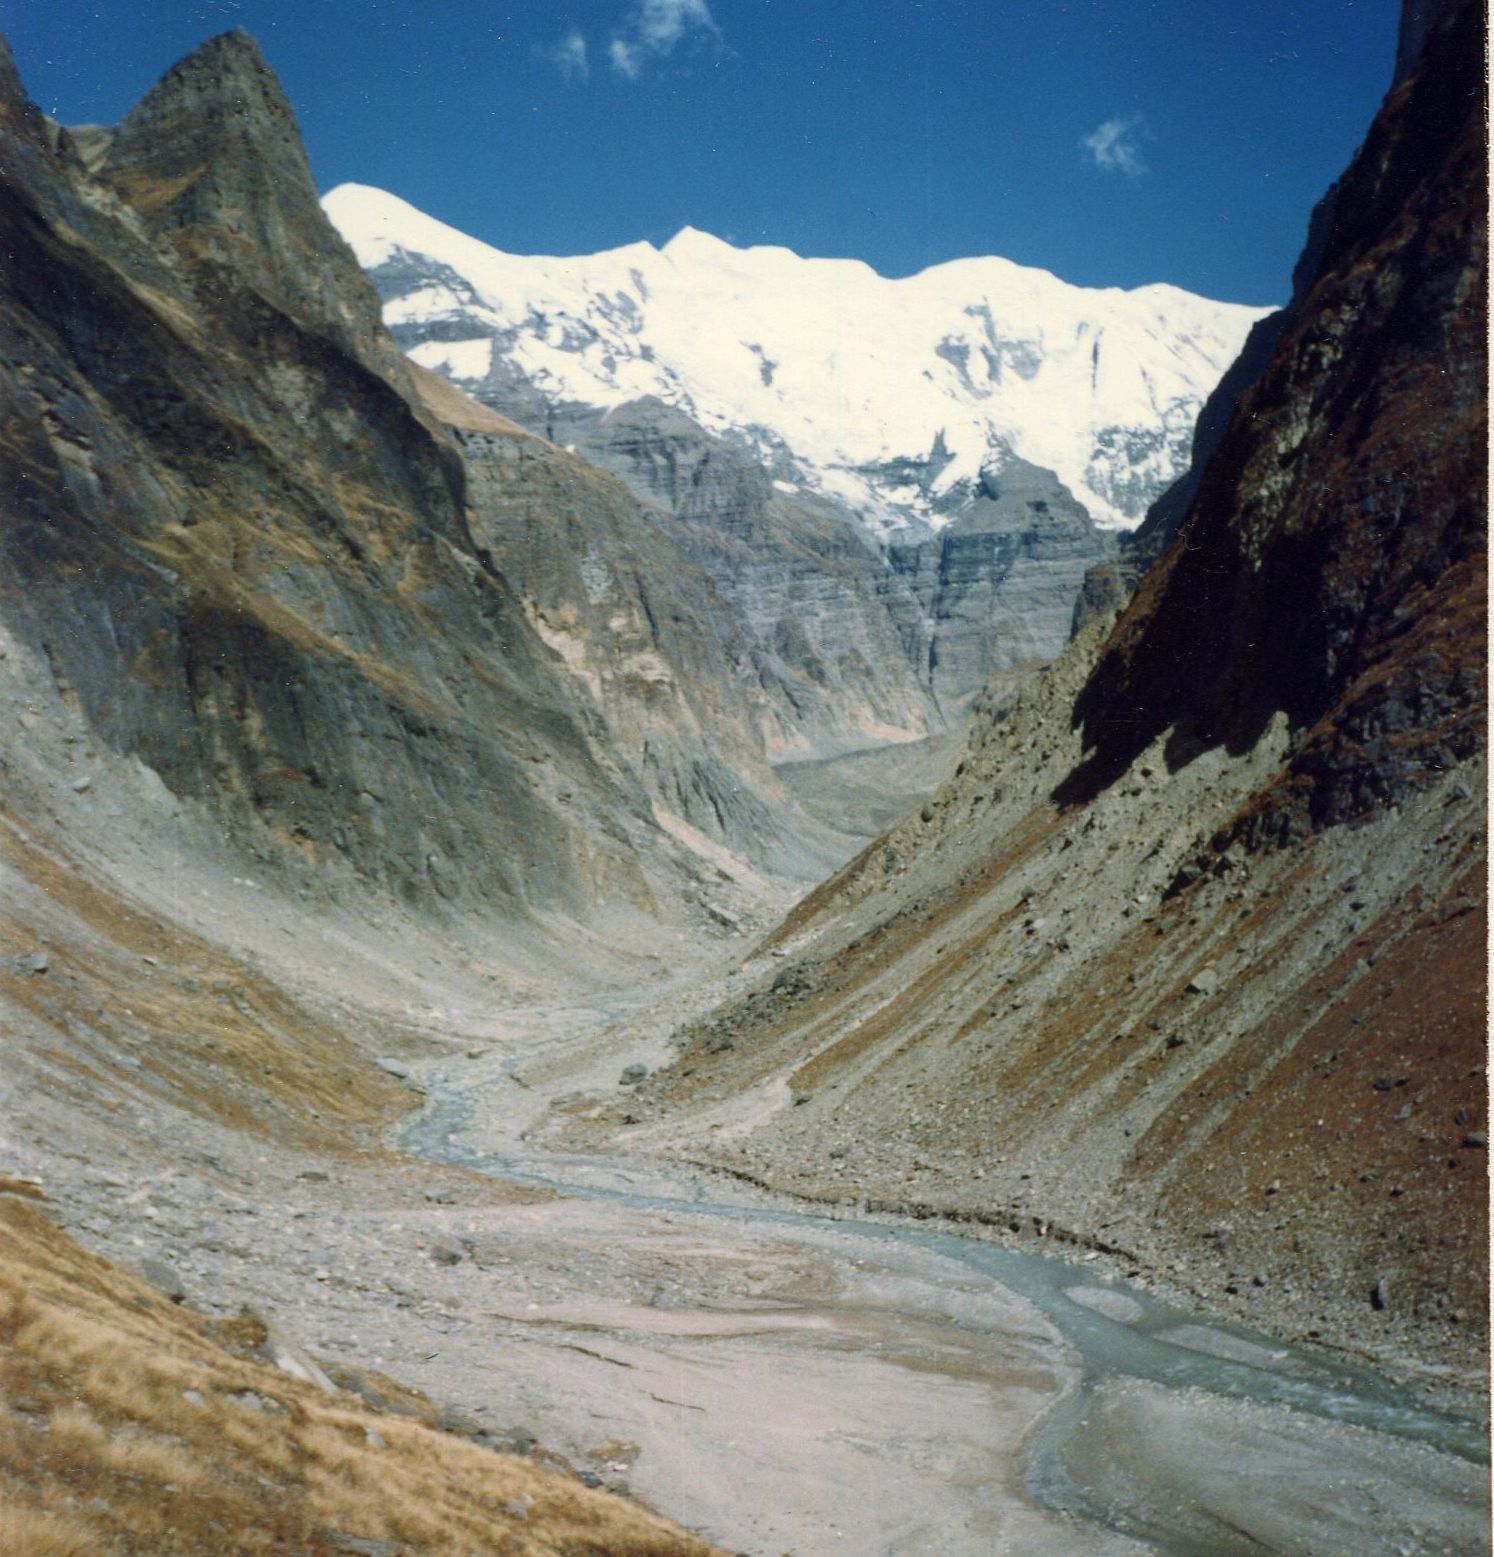 Approach to Chonbarden Glacier